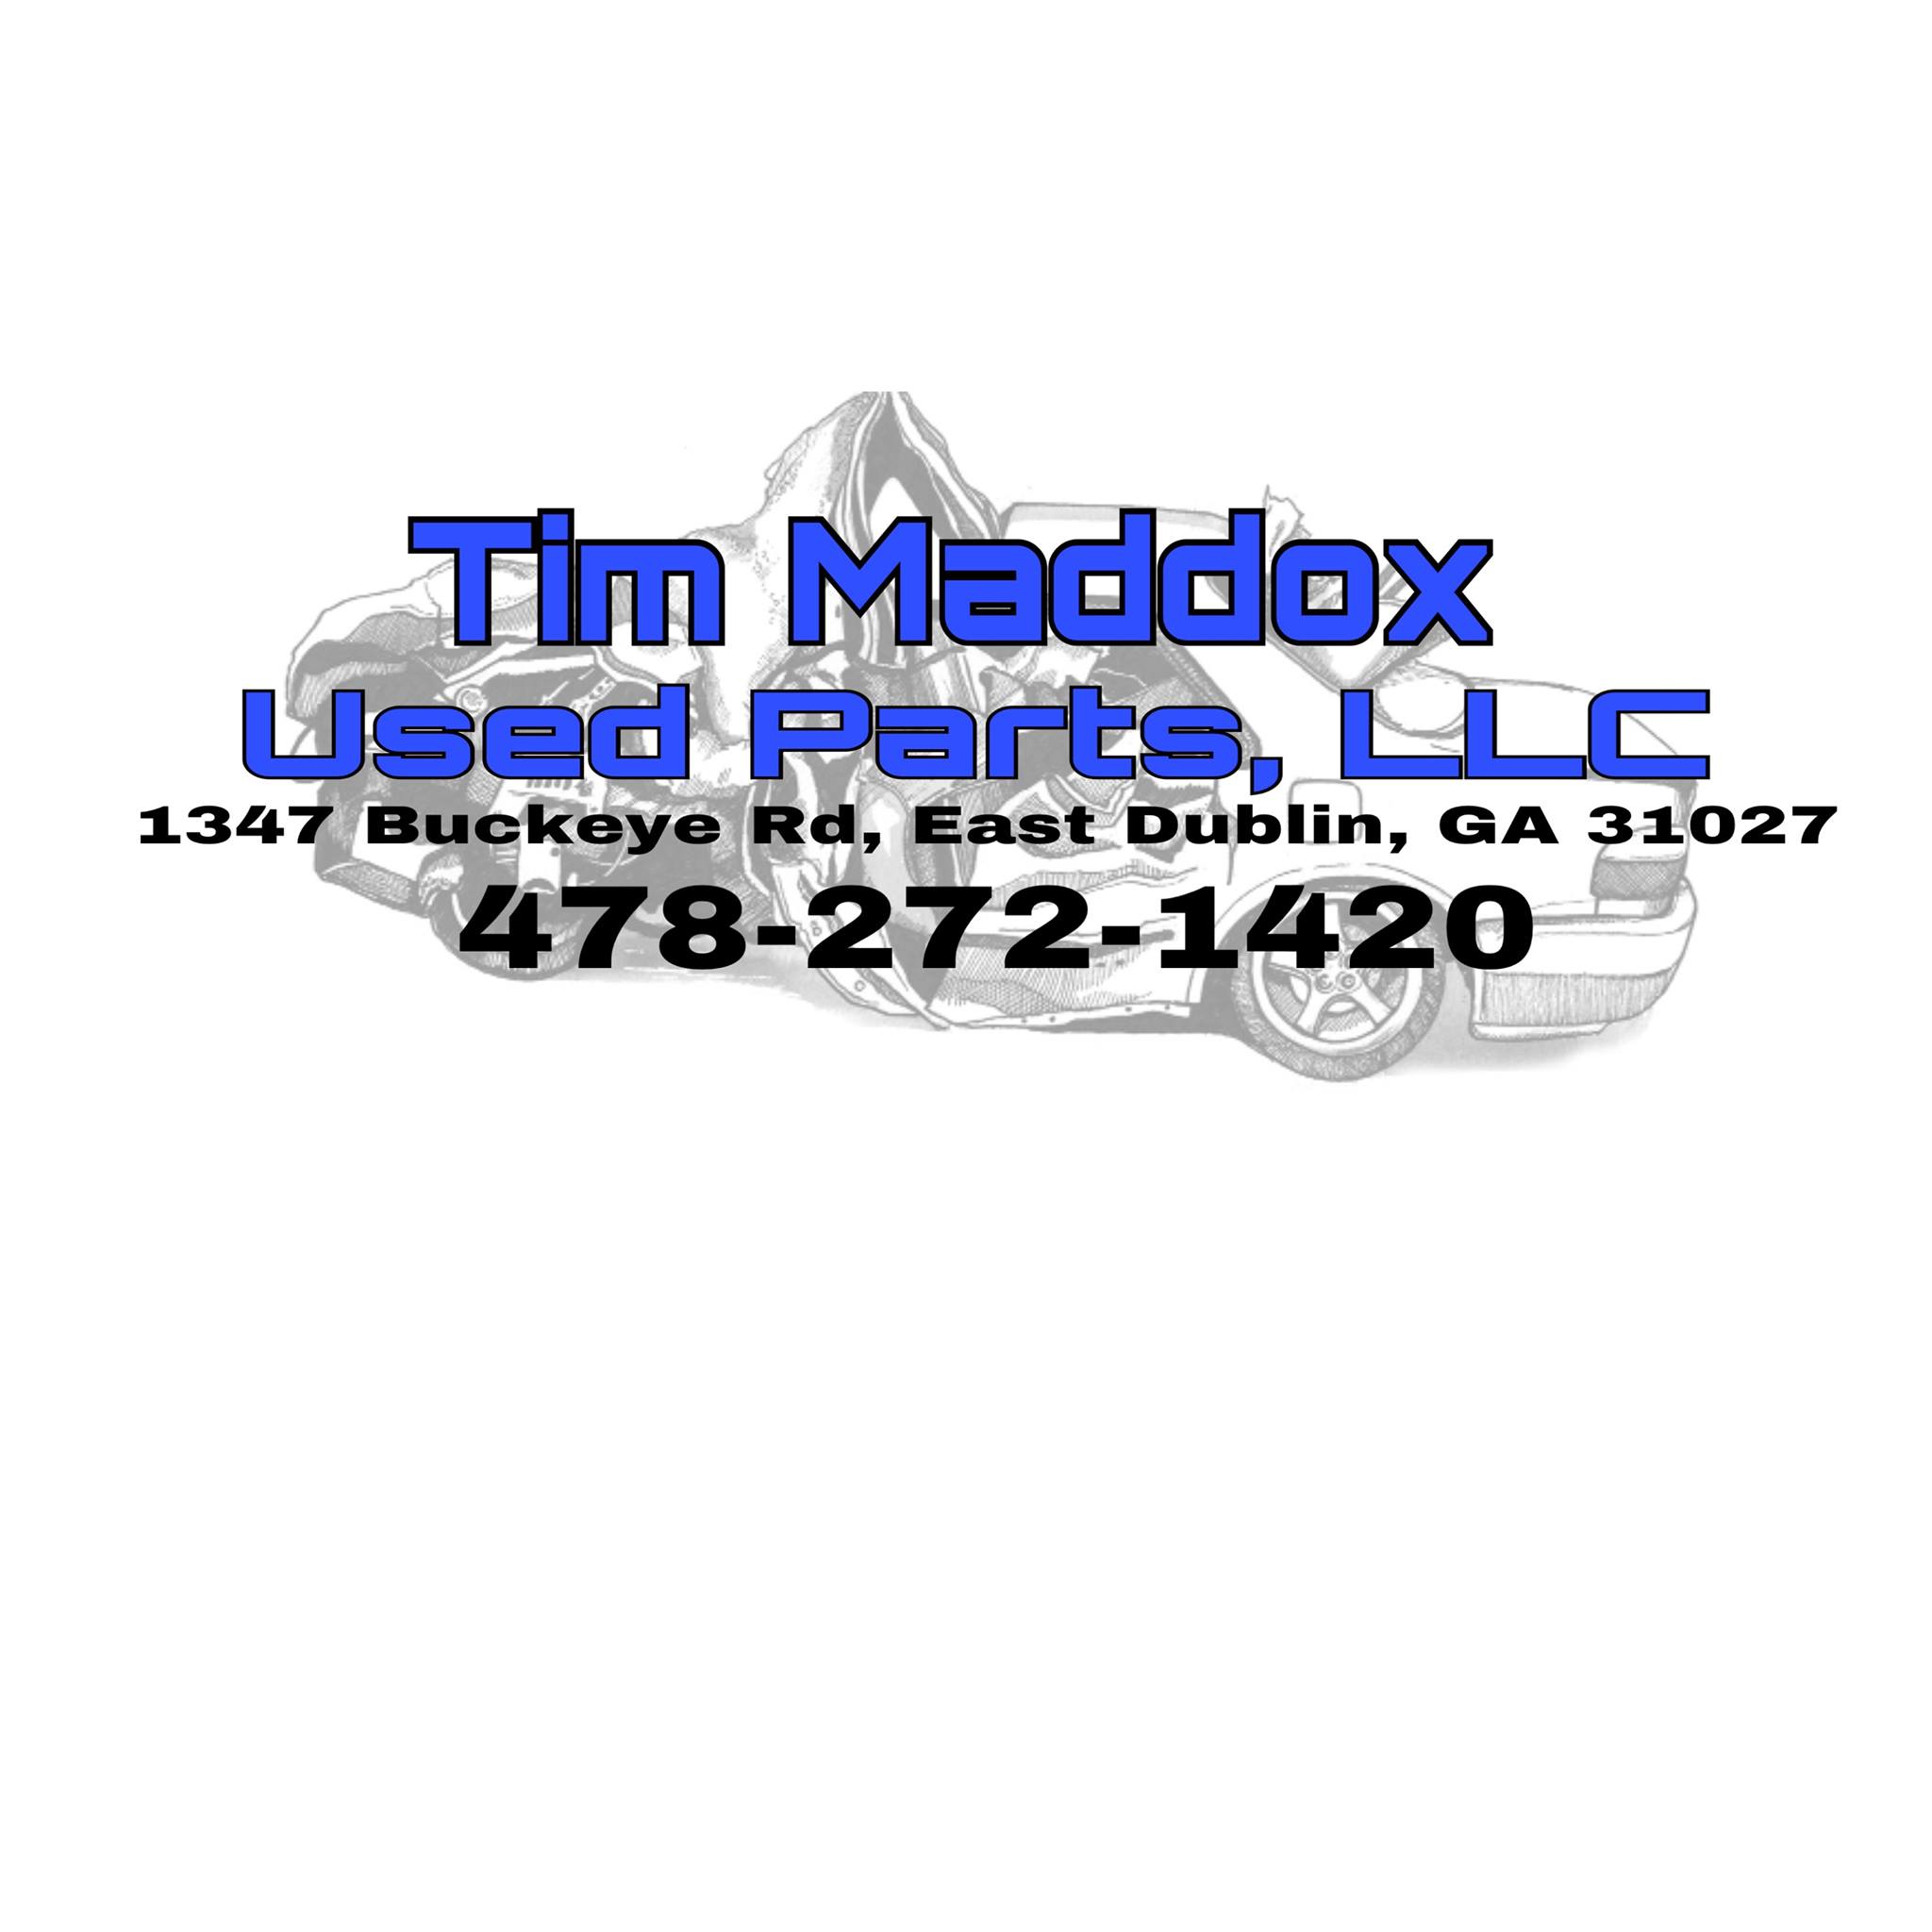 Tim Maddox Used Parts, LLC